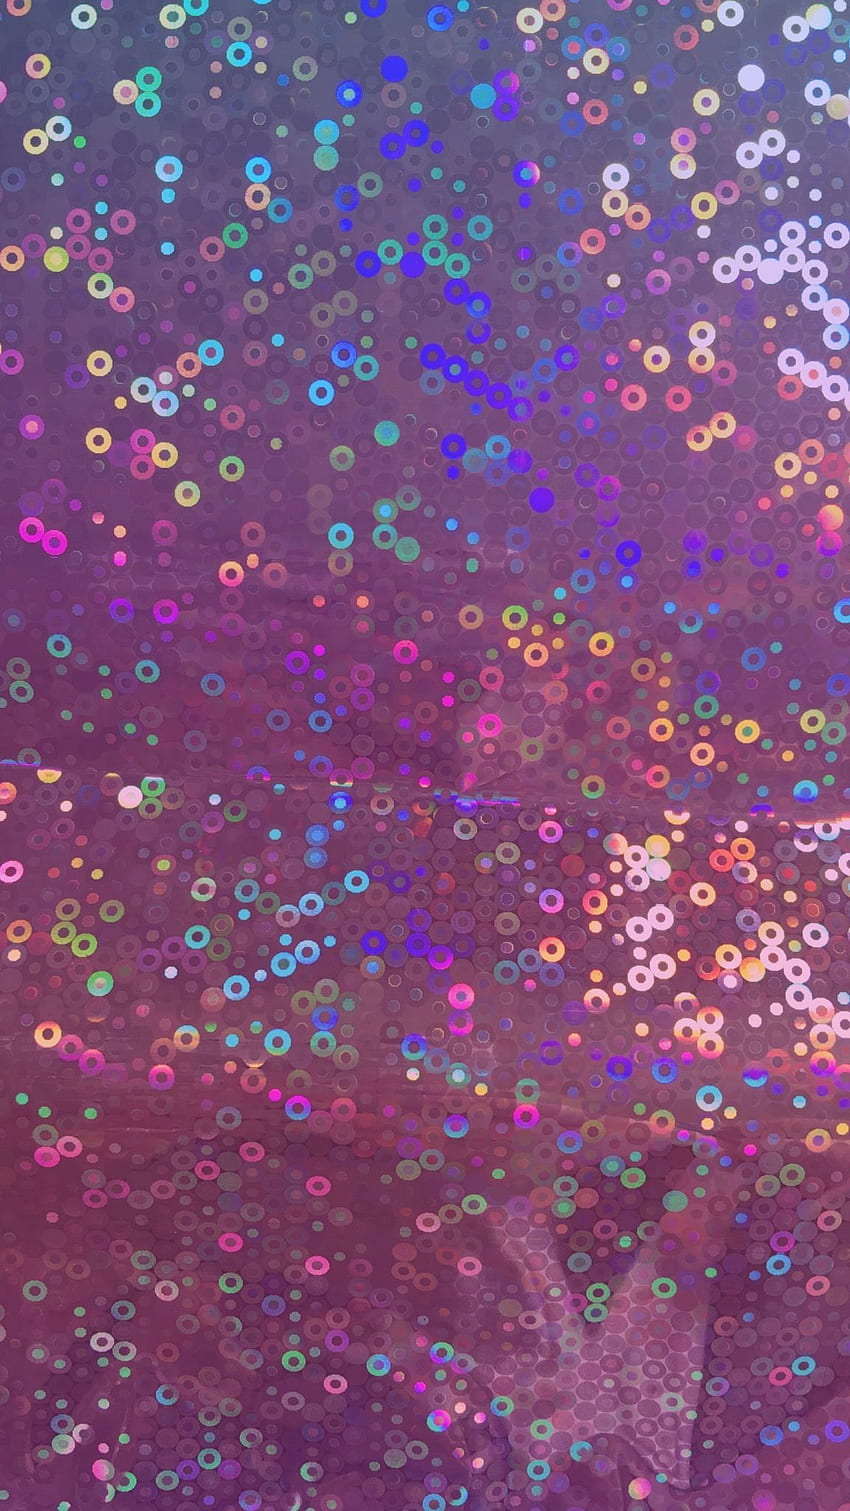 Wallpaper ID 341737  Abstract Glitter Phone Wallpaper  1200x1920 free  download